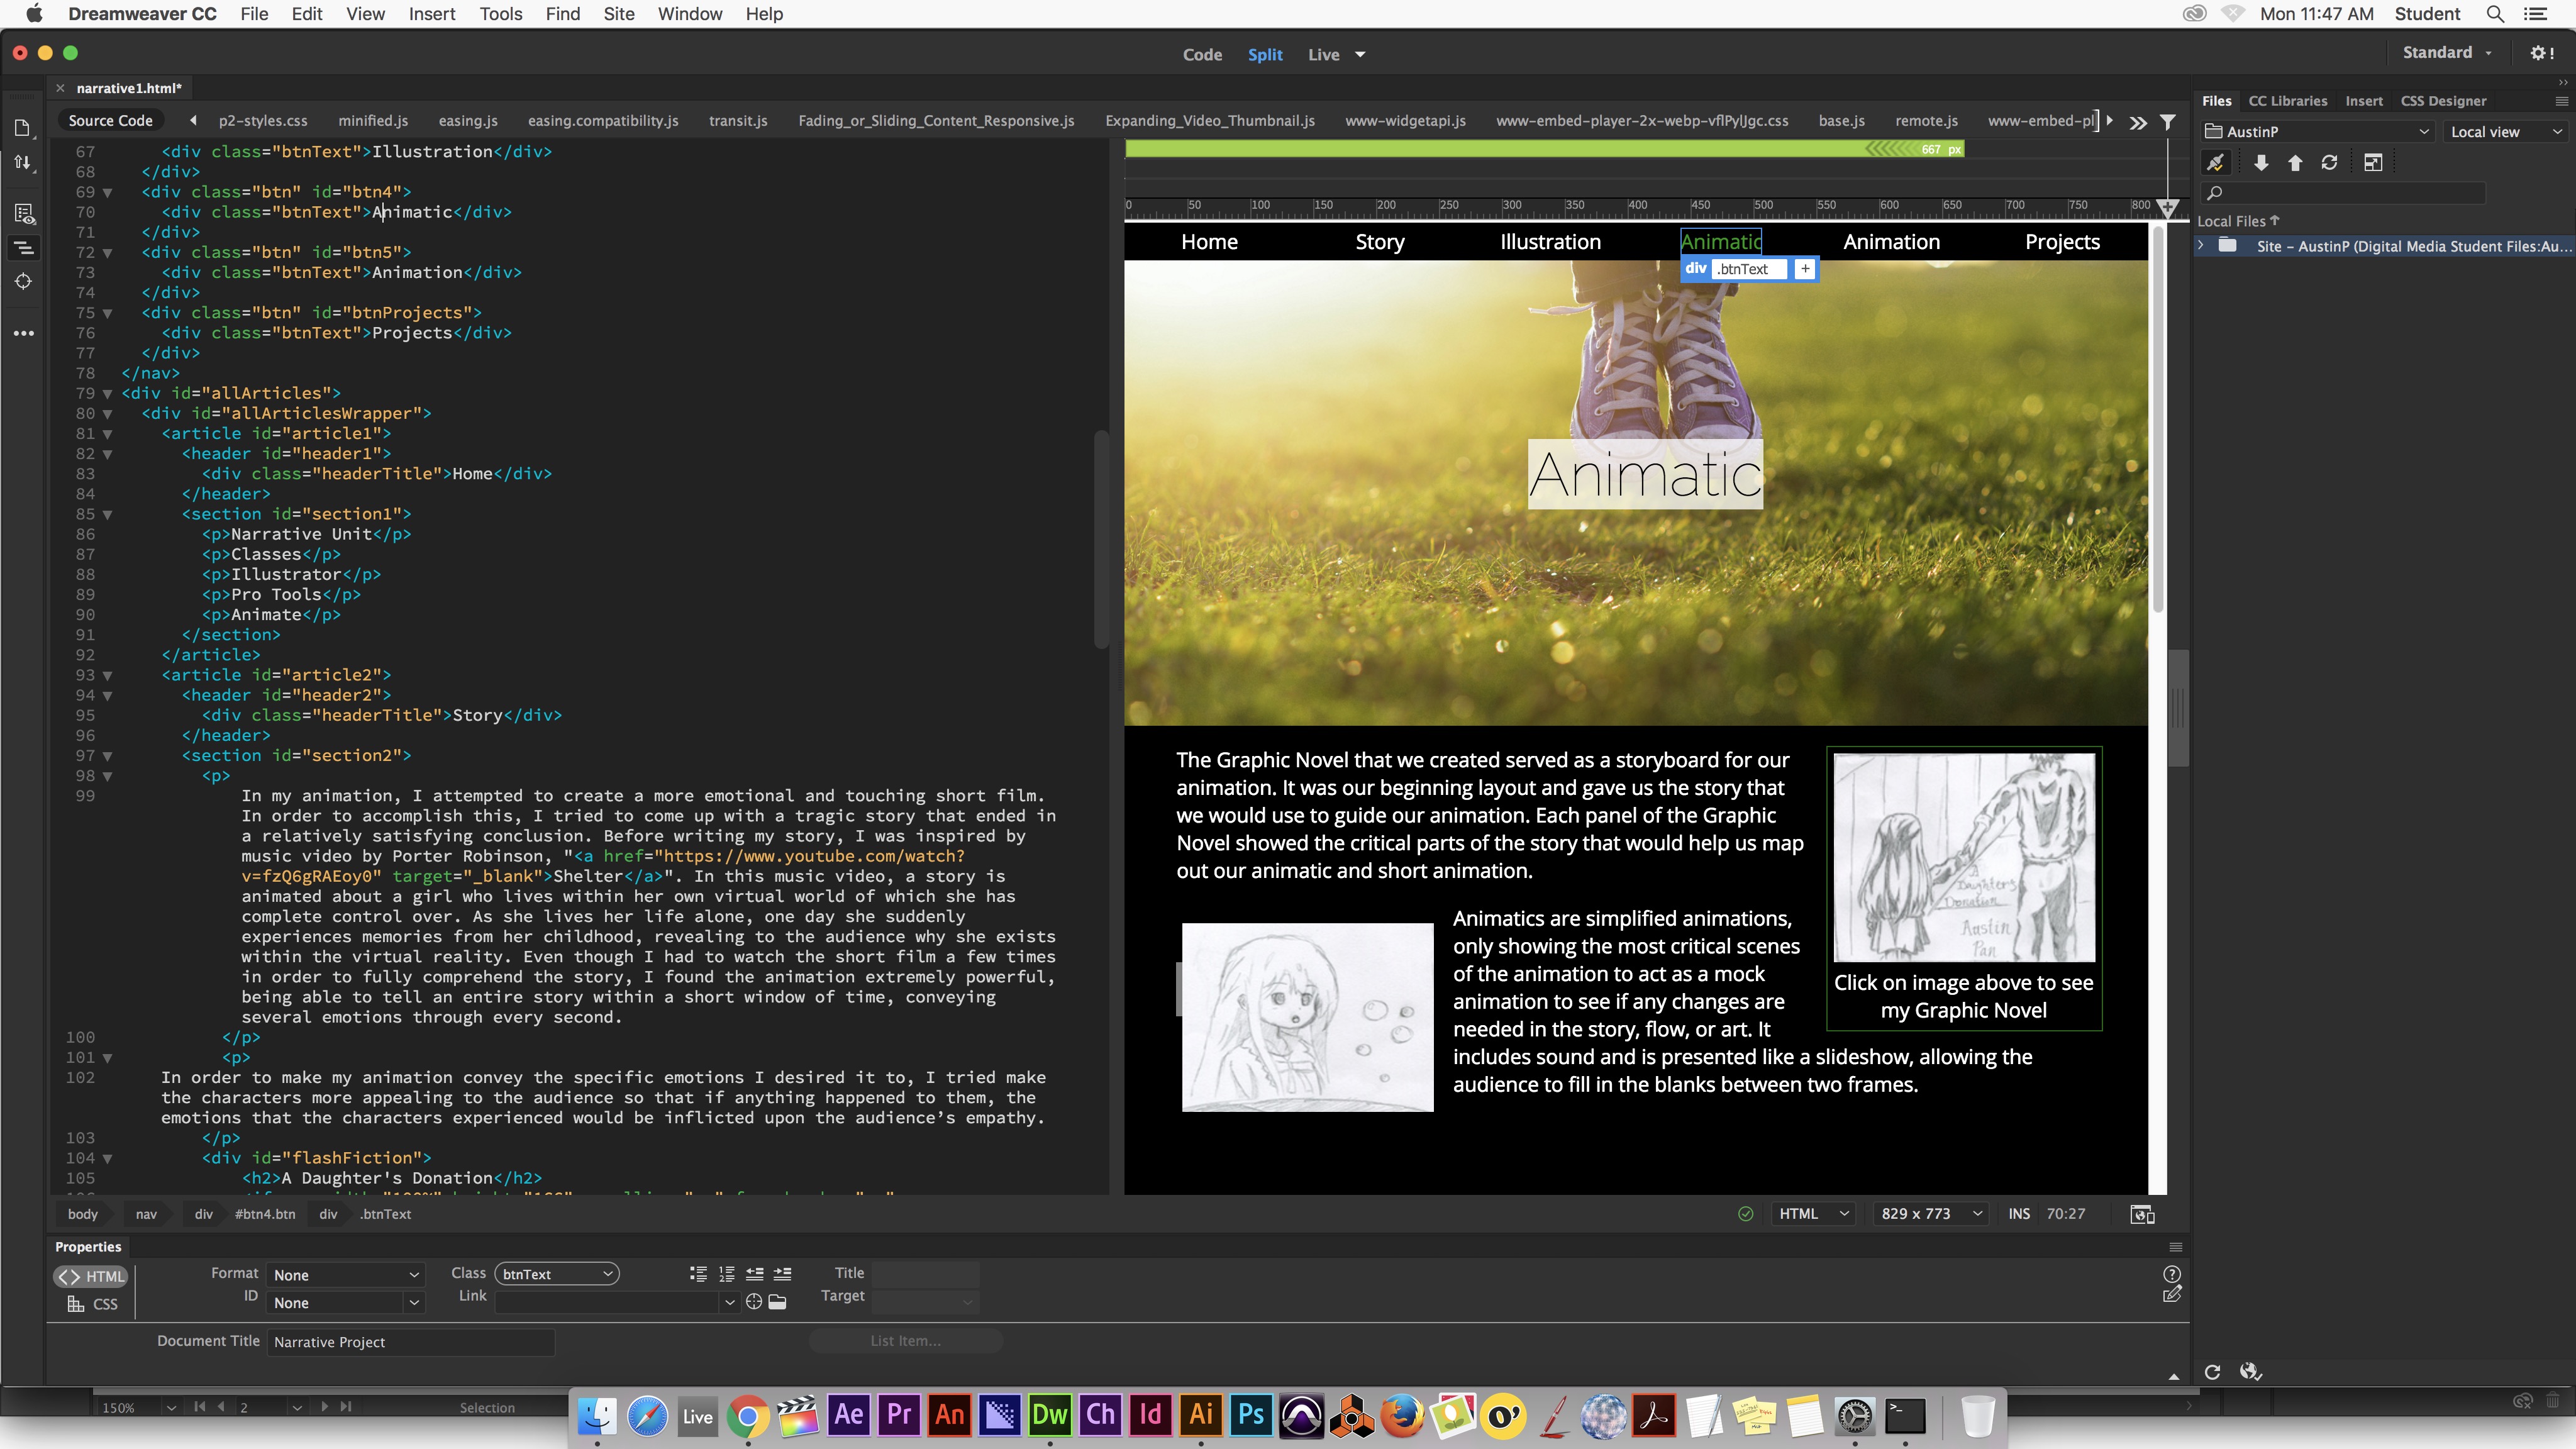 This is a screenshot of my work in Adobe Dreamweaver